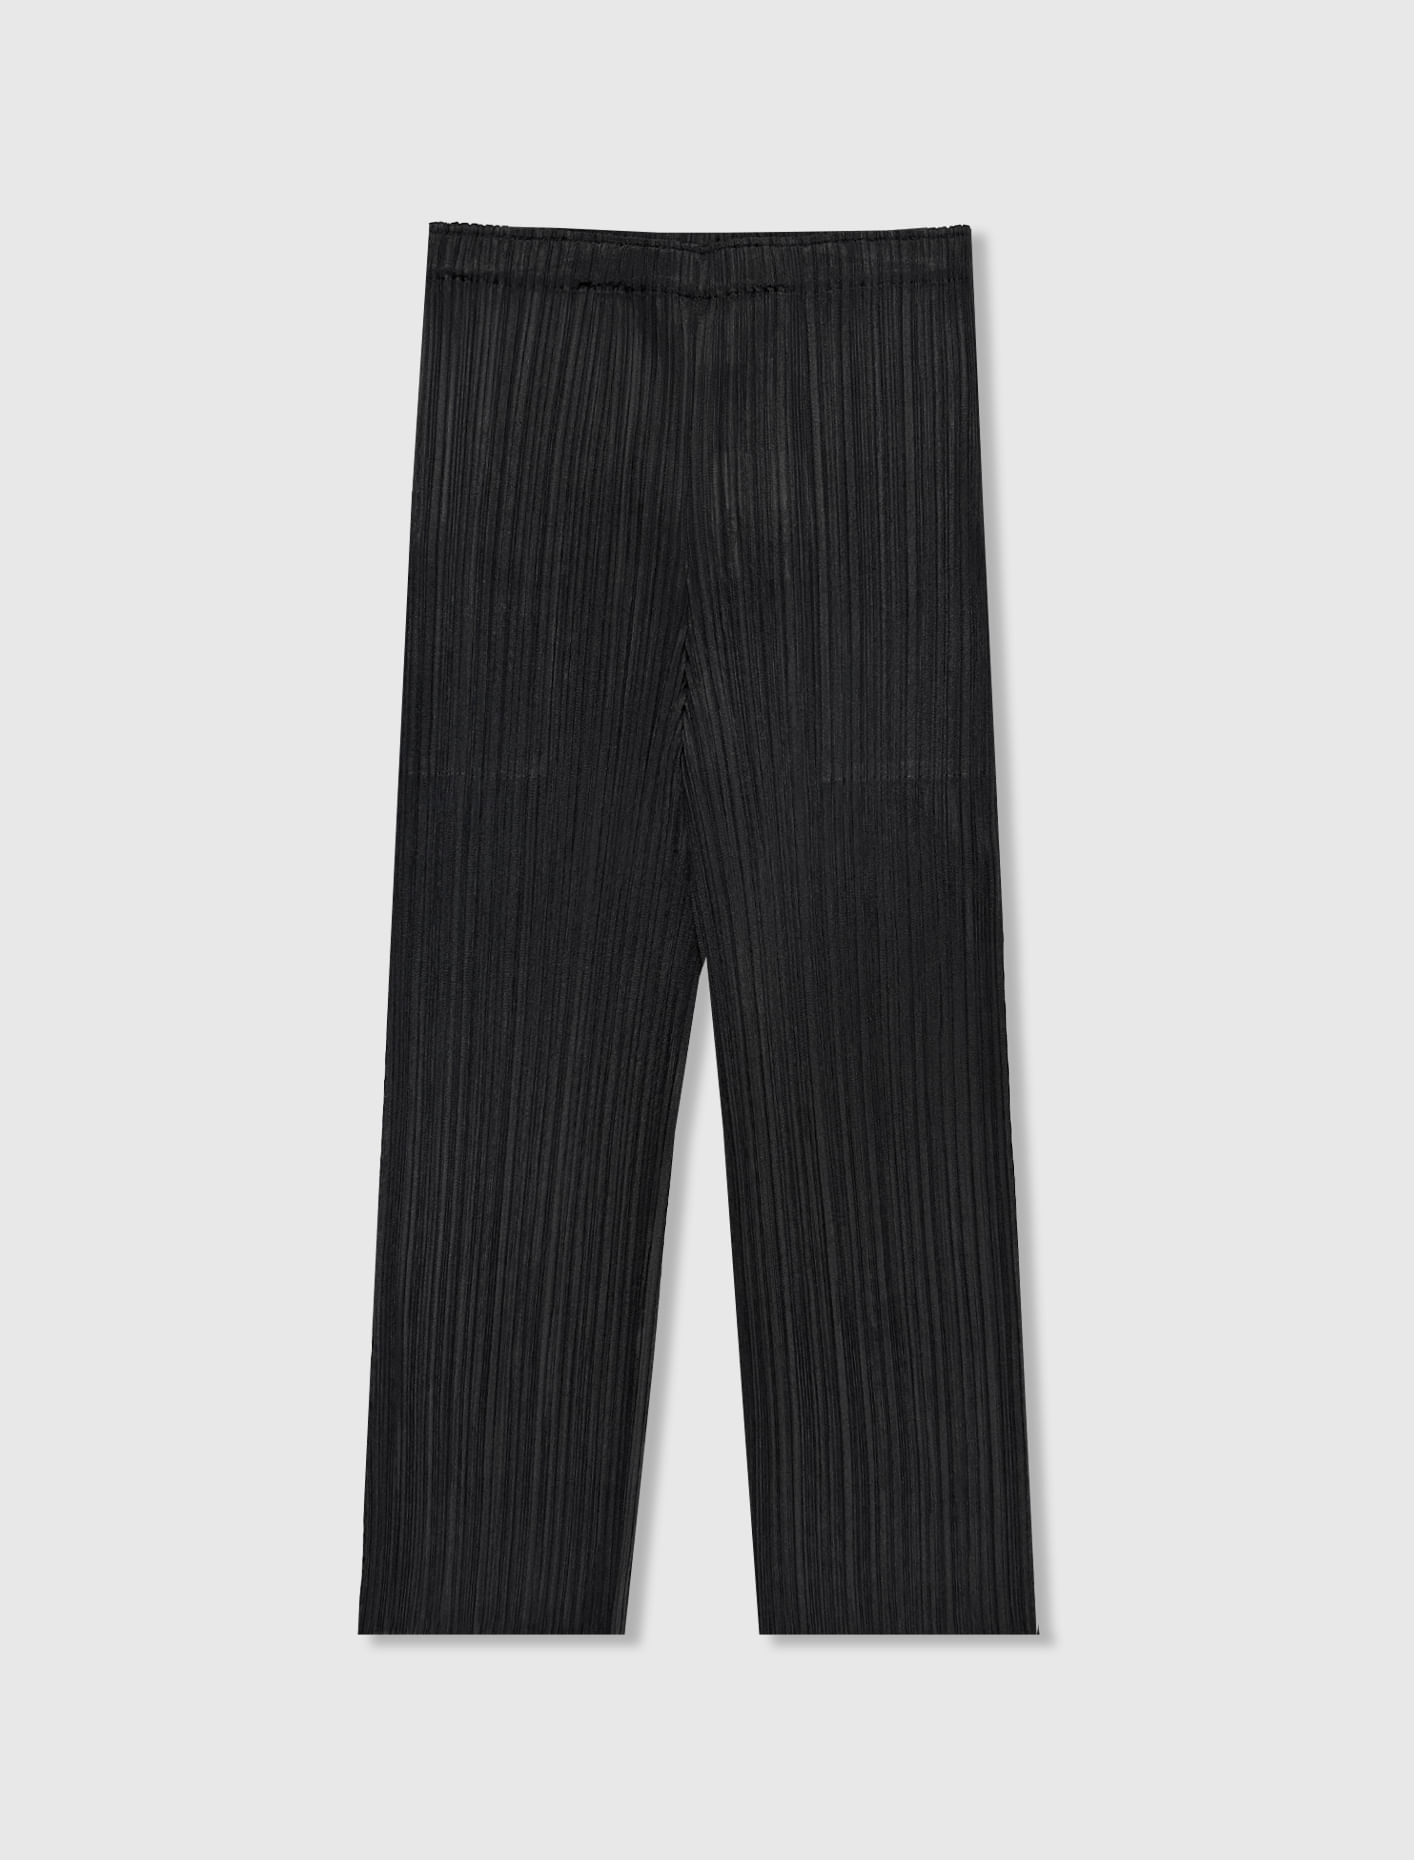 Black Technical-pleated wide-leg trousers, Pleats Please Issey Miyake